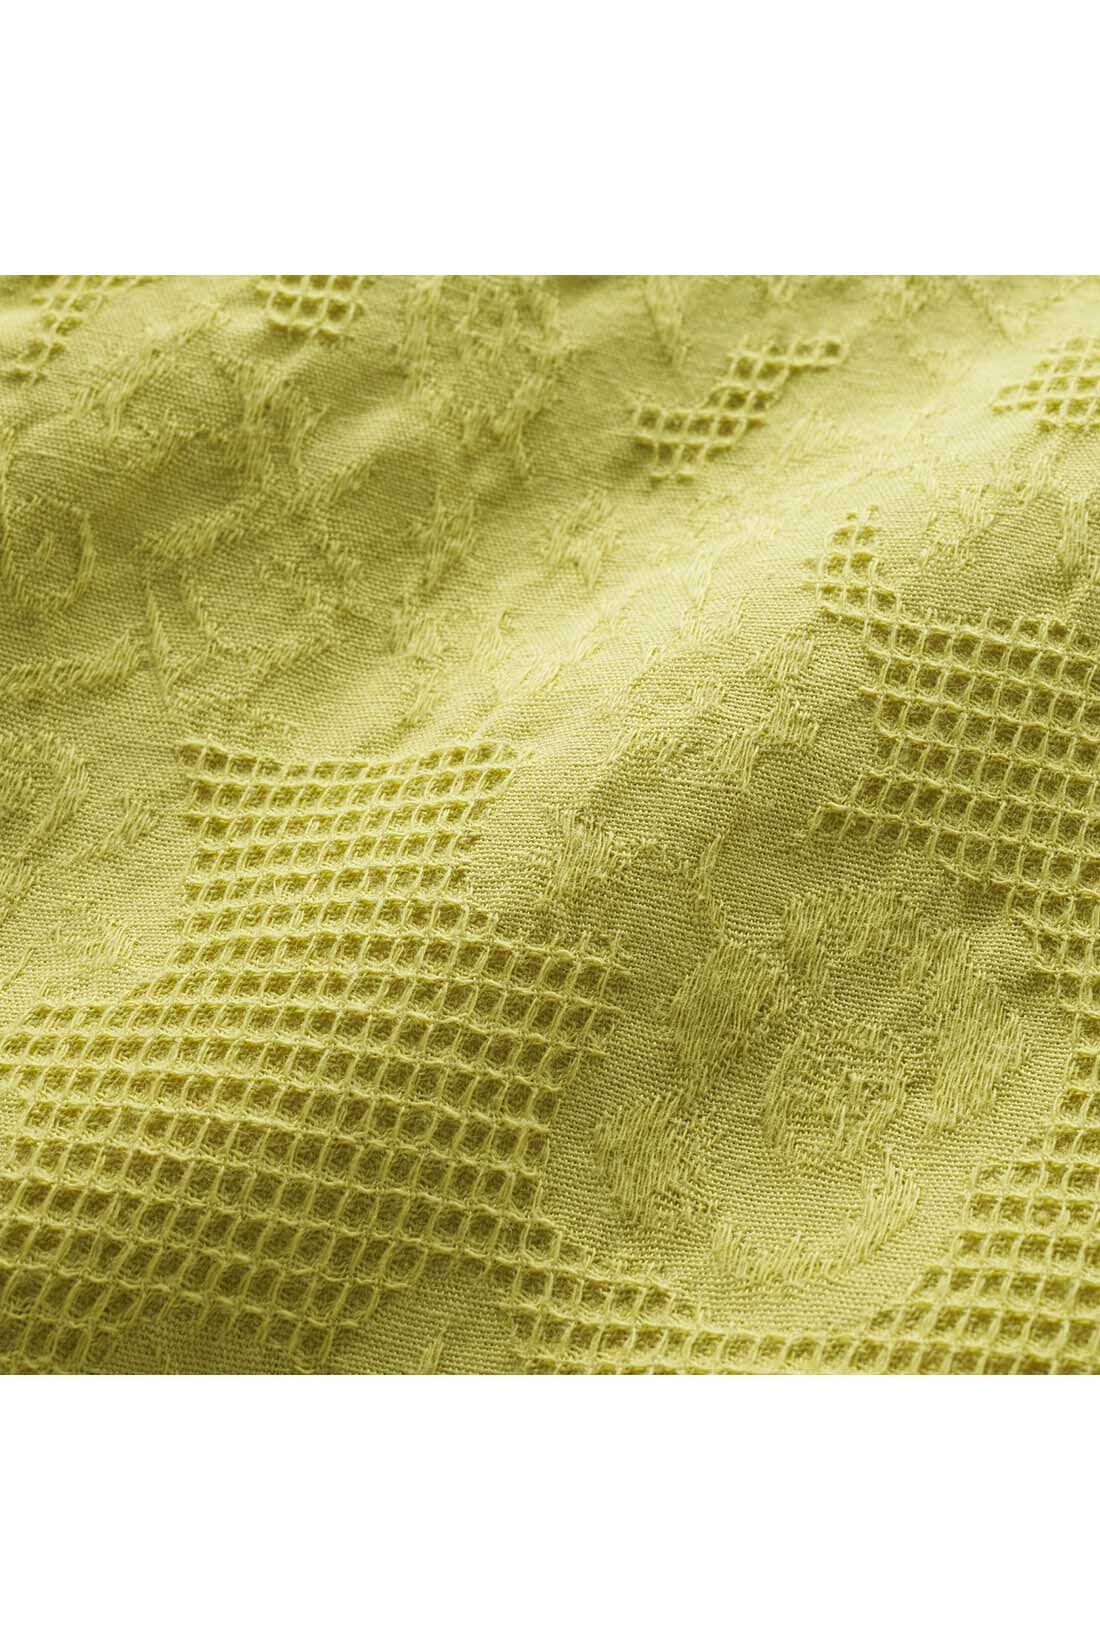 IEDIT|IEDIT[イディット]　フラワー柄のコットンドビープルオーバー〈ライムグリーン〉|格子柄の中に花が浮き立つ、立体的な織り柄のコットンドビー素材がさらりと快適。